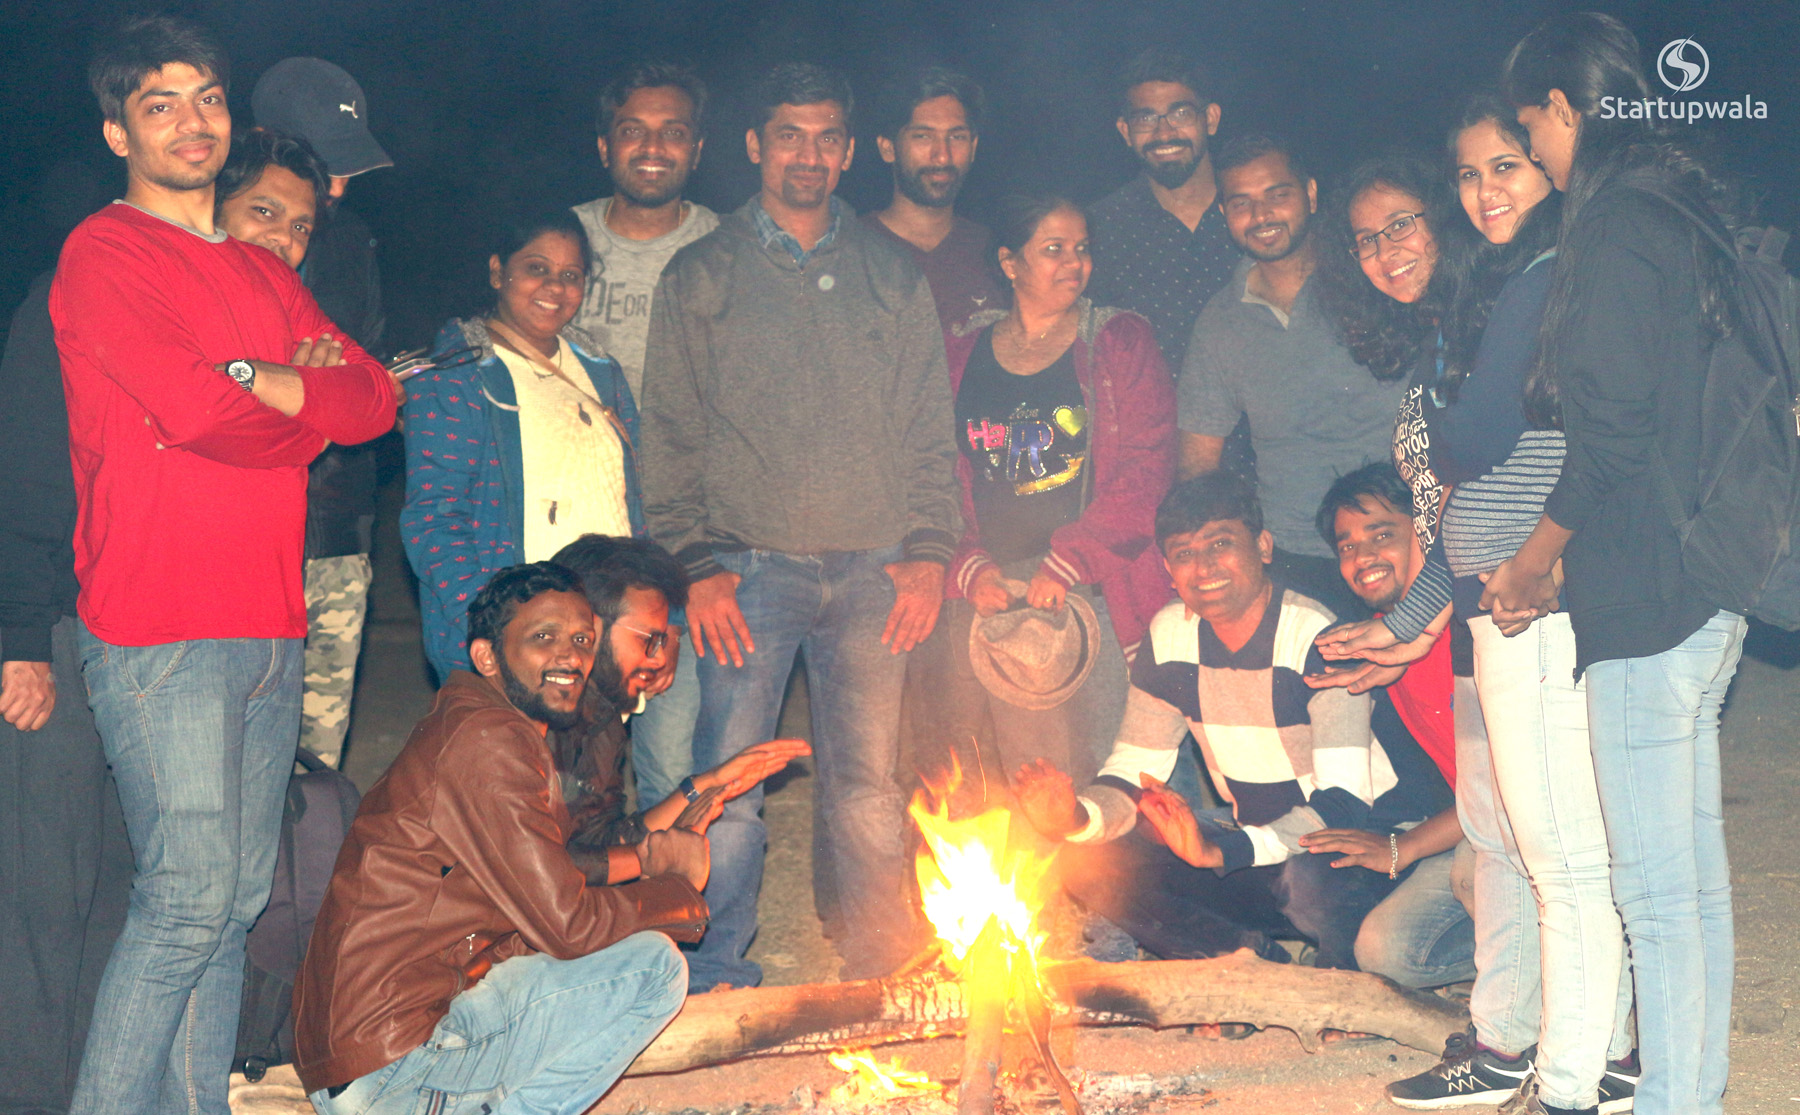 Camp fire - startupwala team